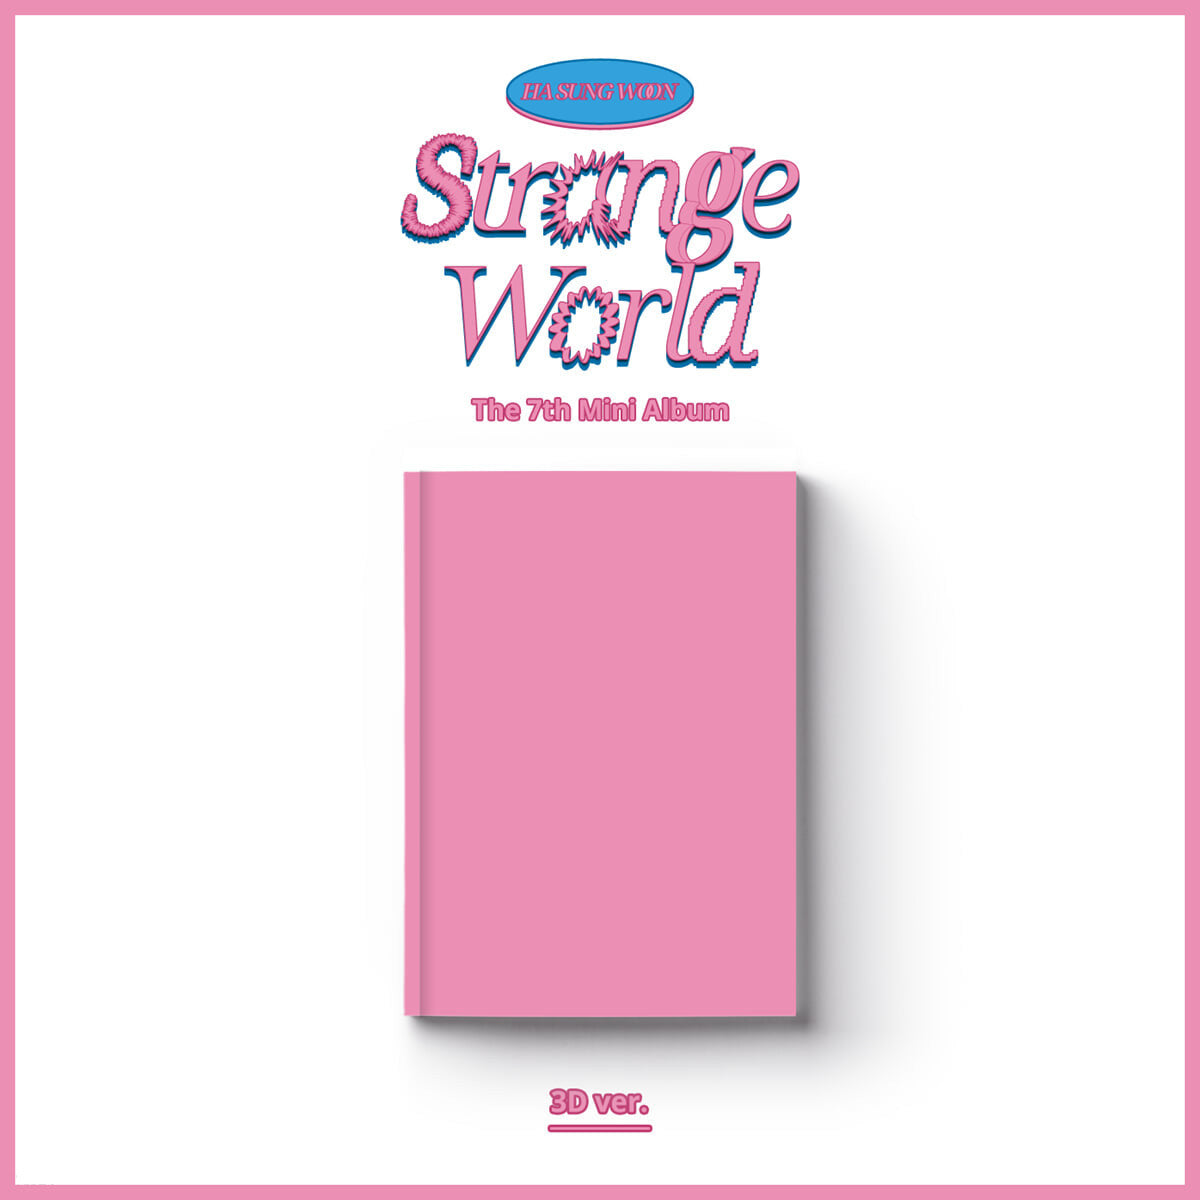 HA SUNG WOON 7th Mini Album : Strange World (Photobook Ver)